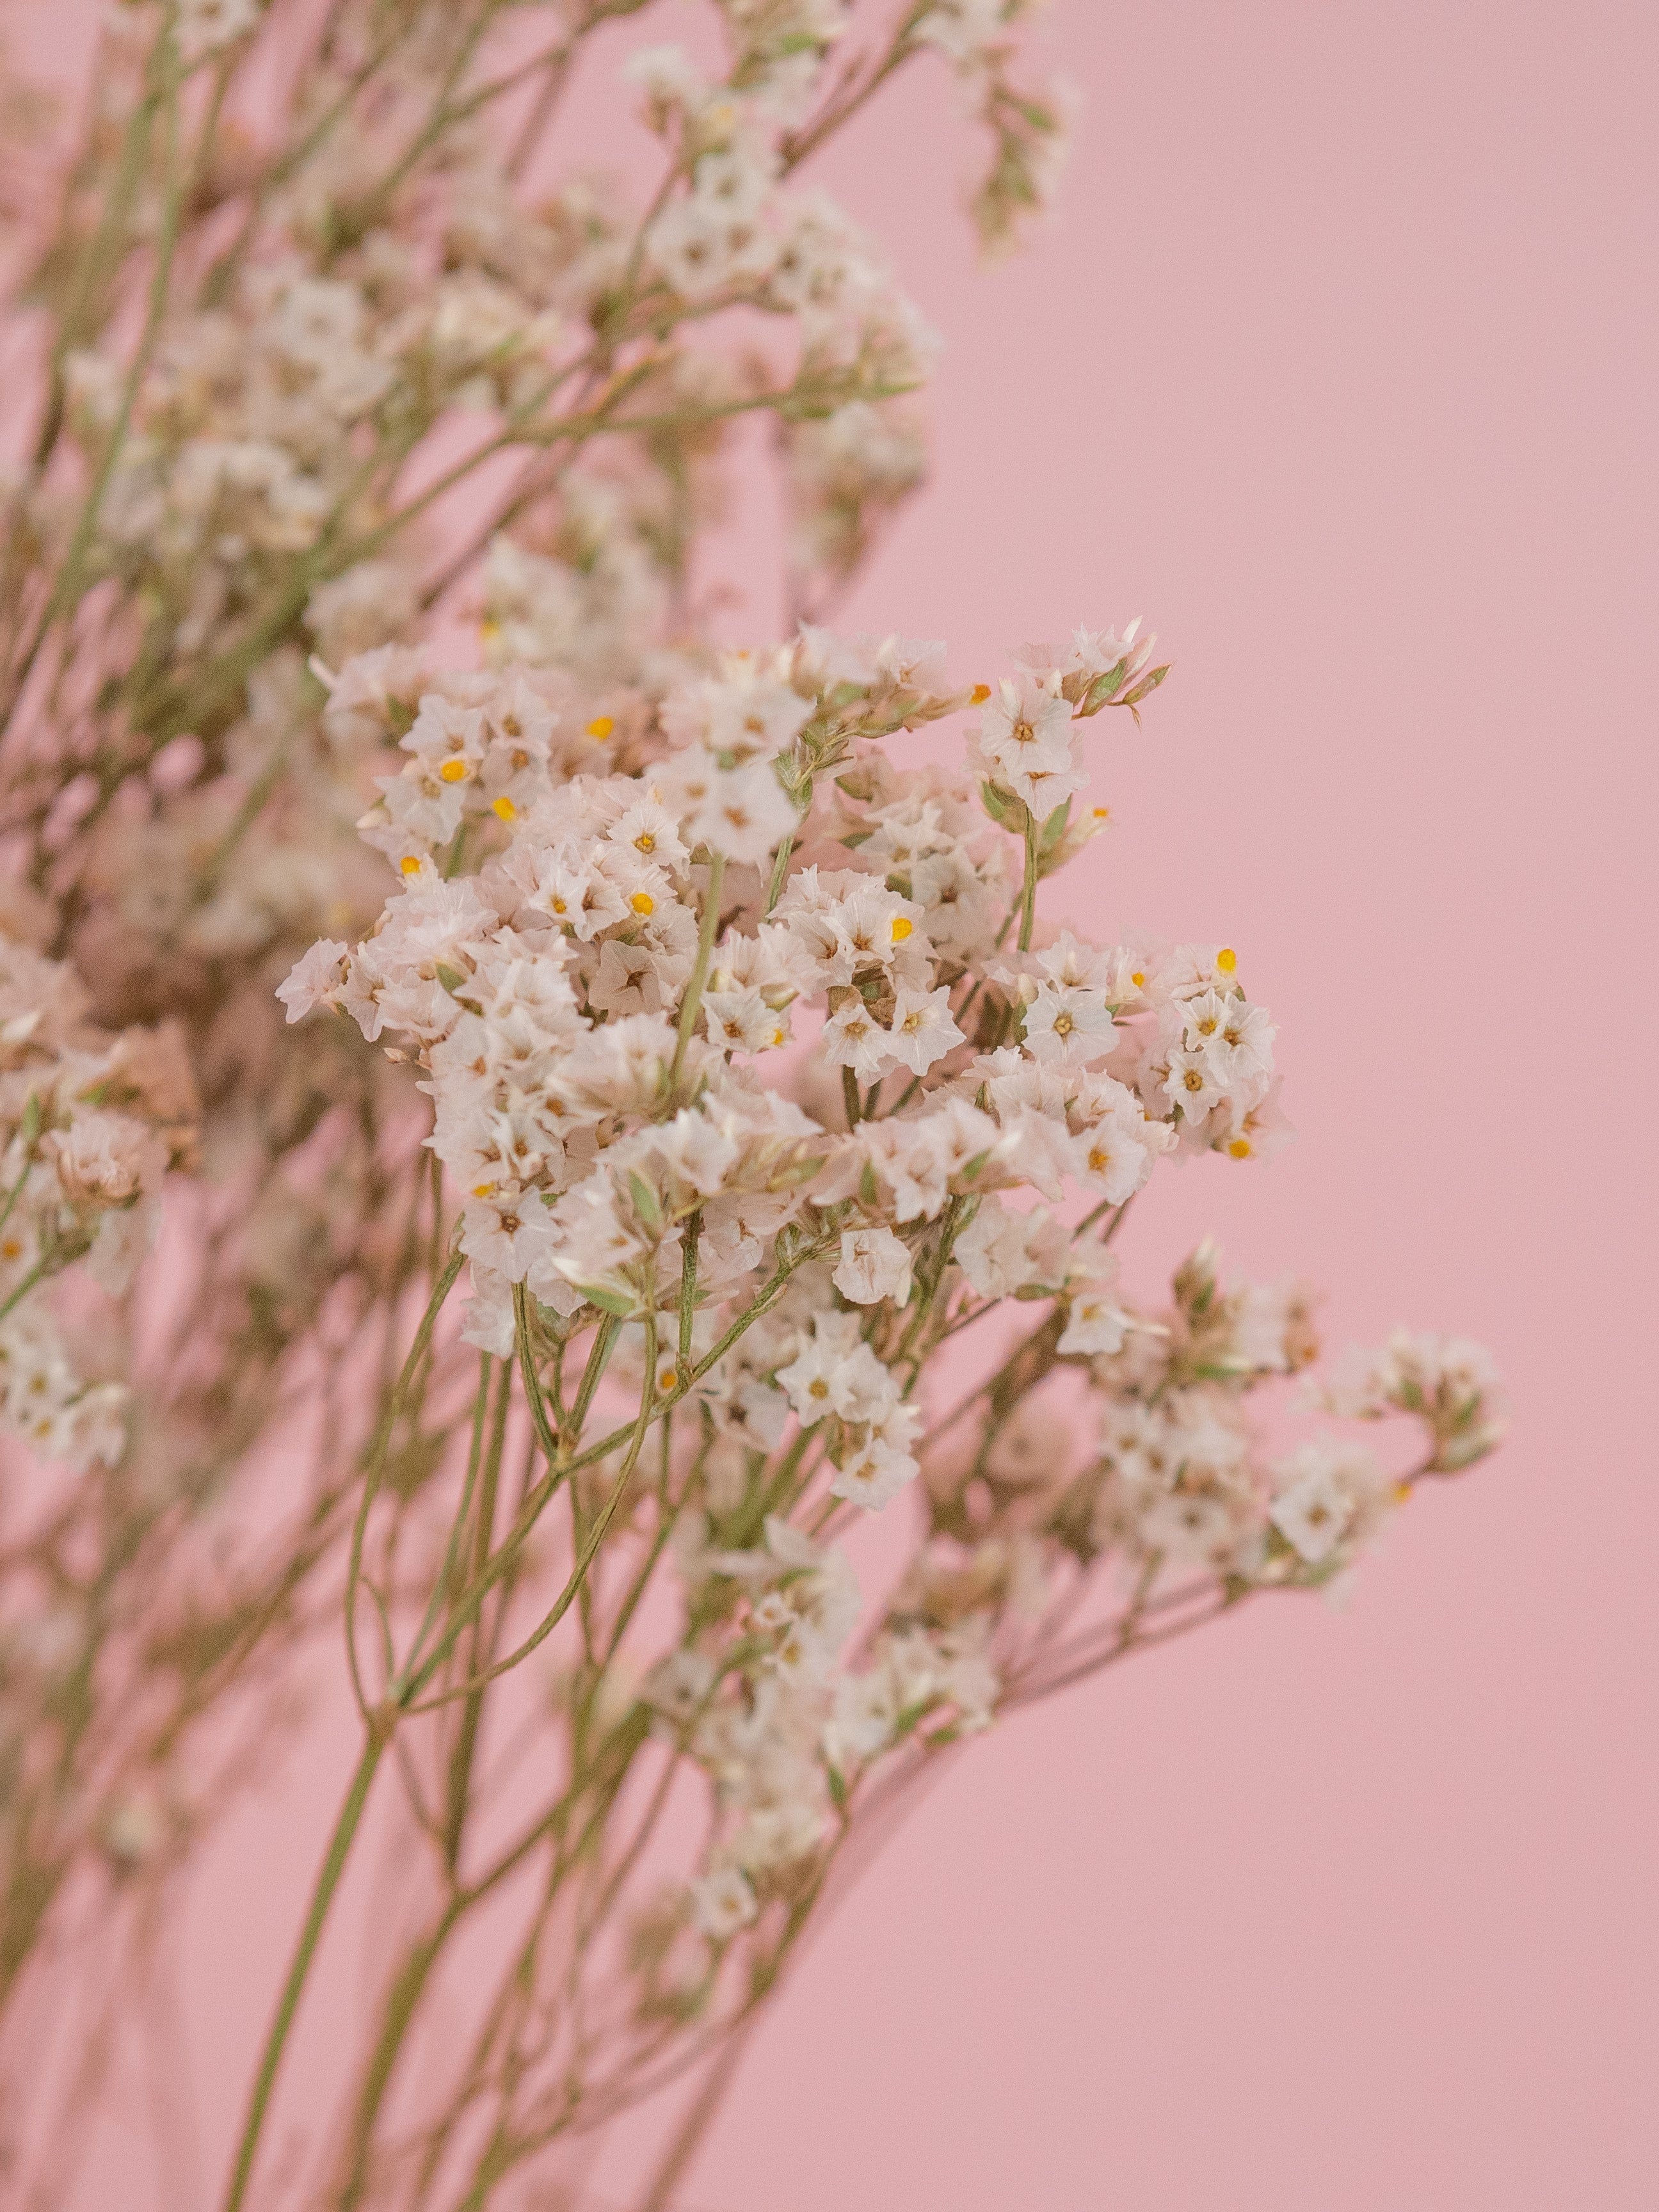 strandflieder-getrocknet-natur-weiss-trockenblumen-bundware-diy-beflowerly